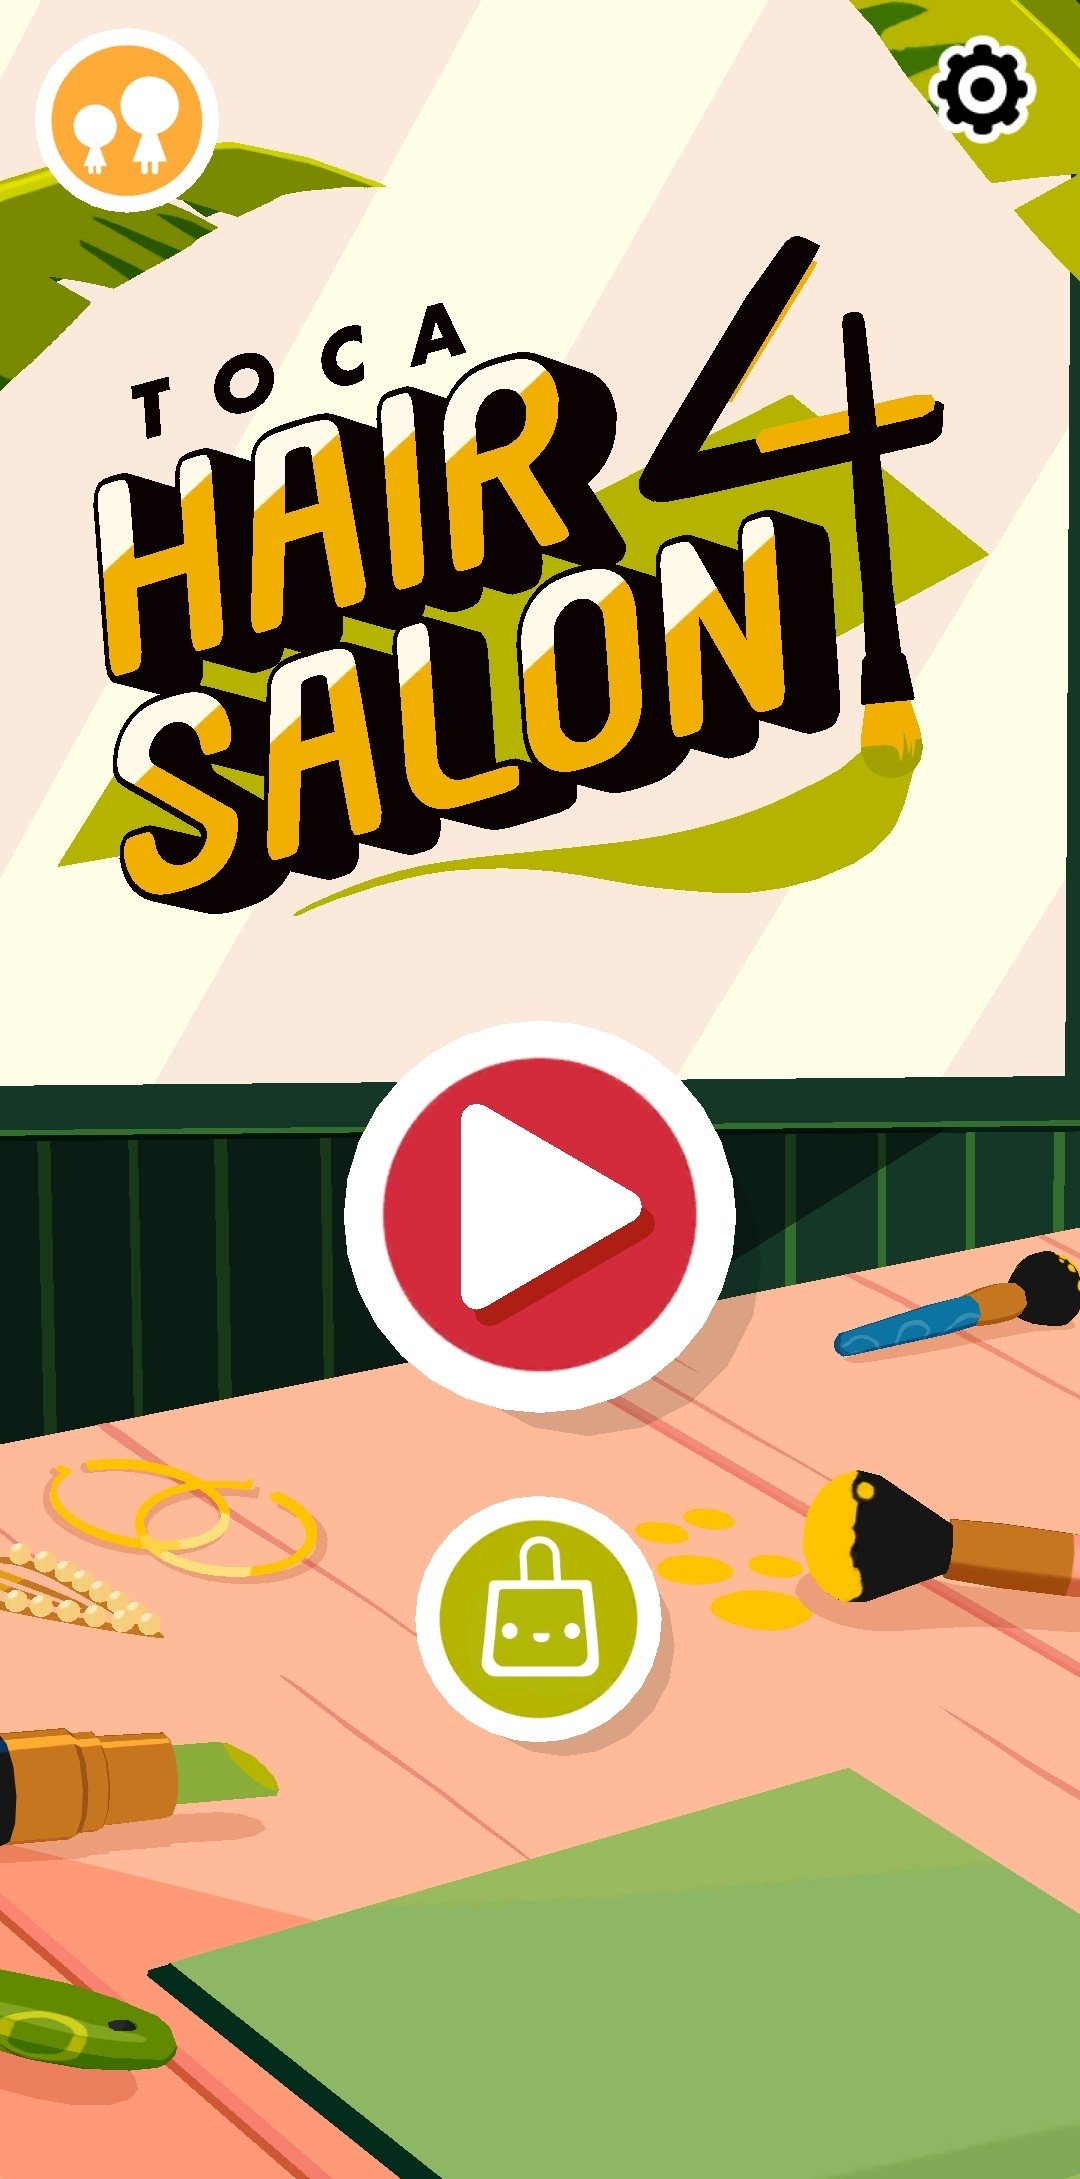 toca hair salon 3 download free